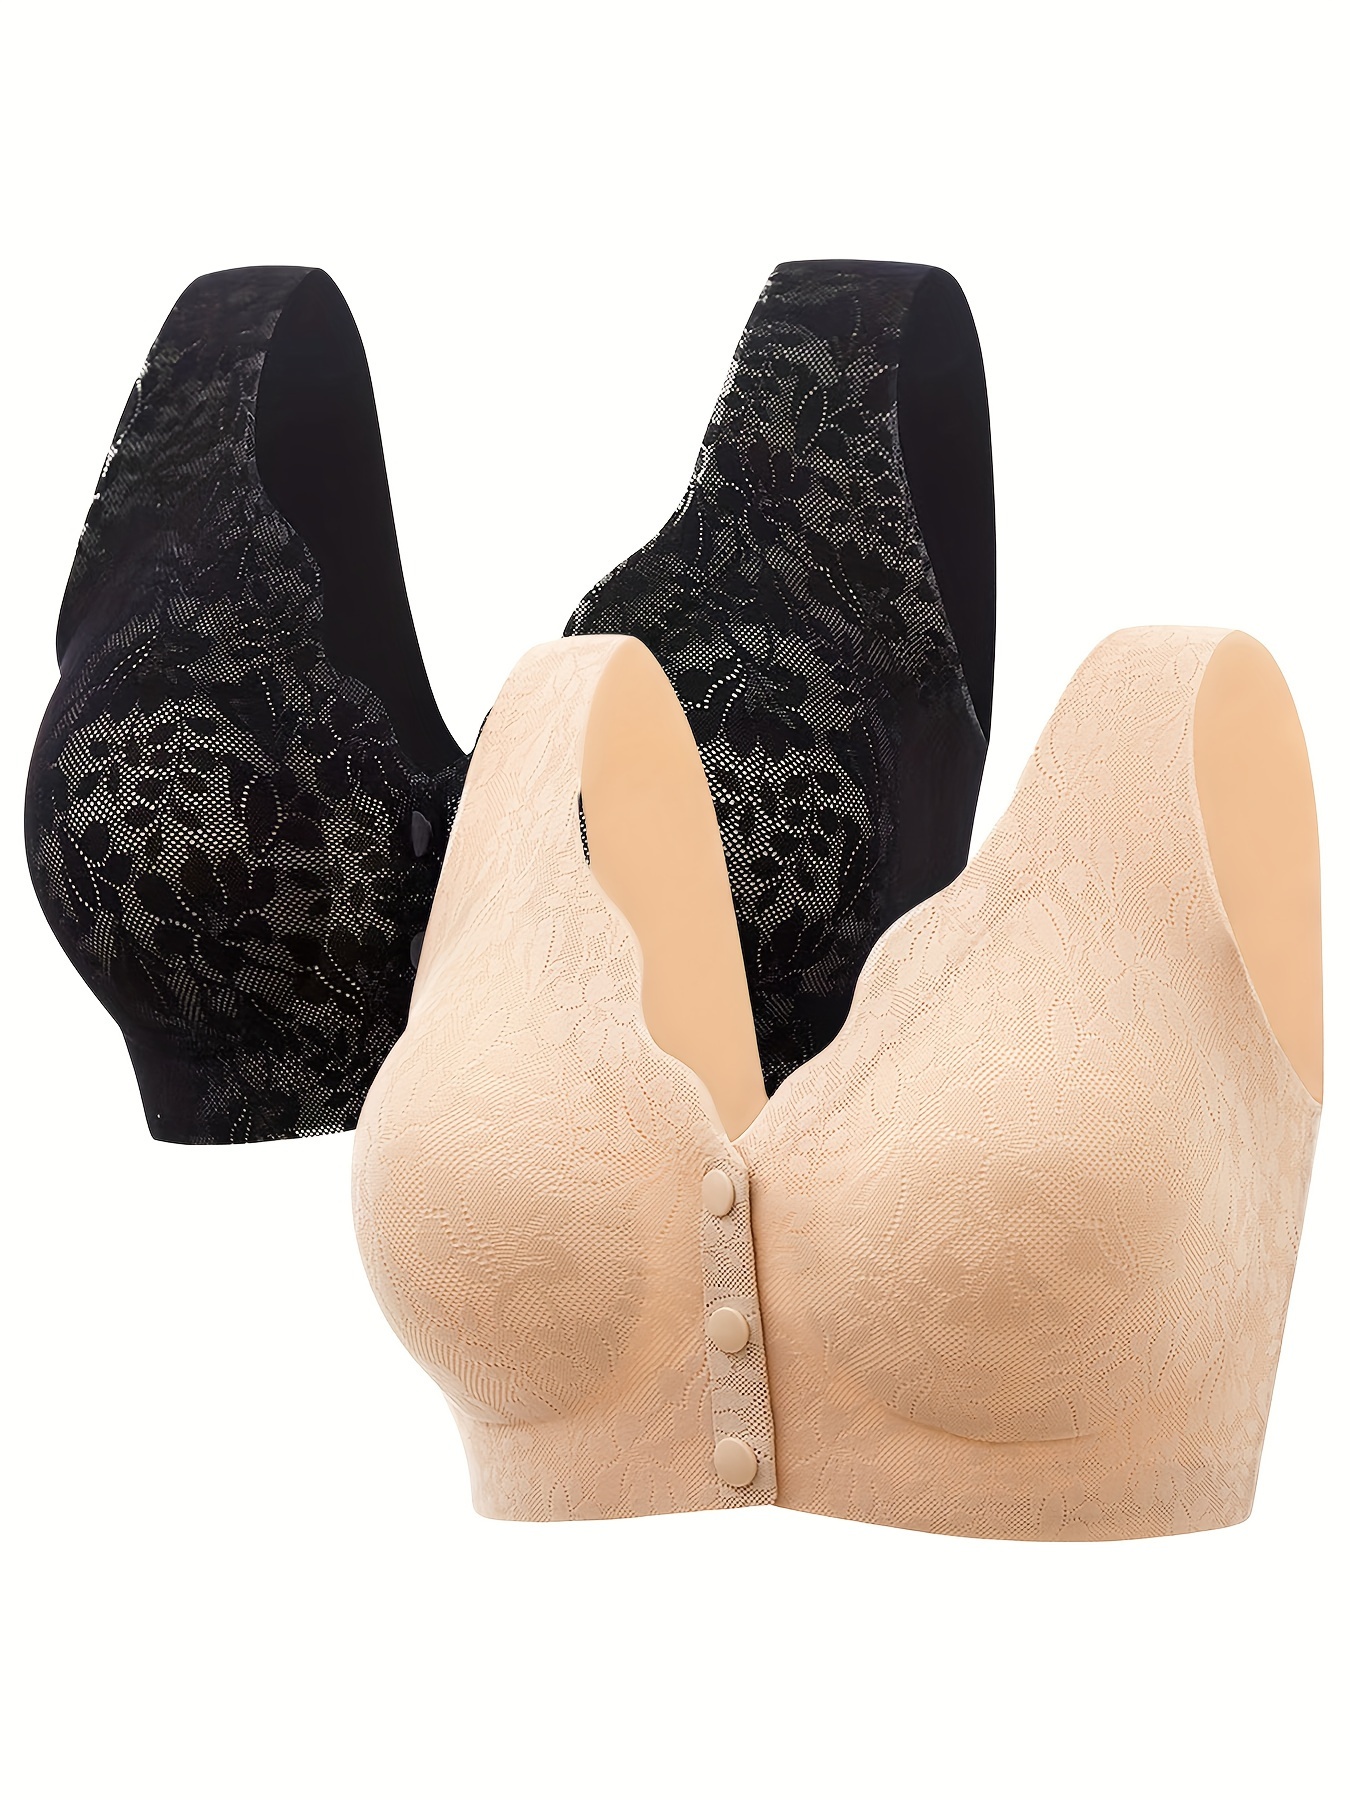 2pcs Contrast Lace Wireless Bras, Comfy & Breathable Full Coverage Bra,  Women's Lingerie & Underwear